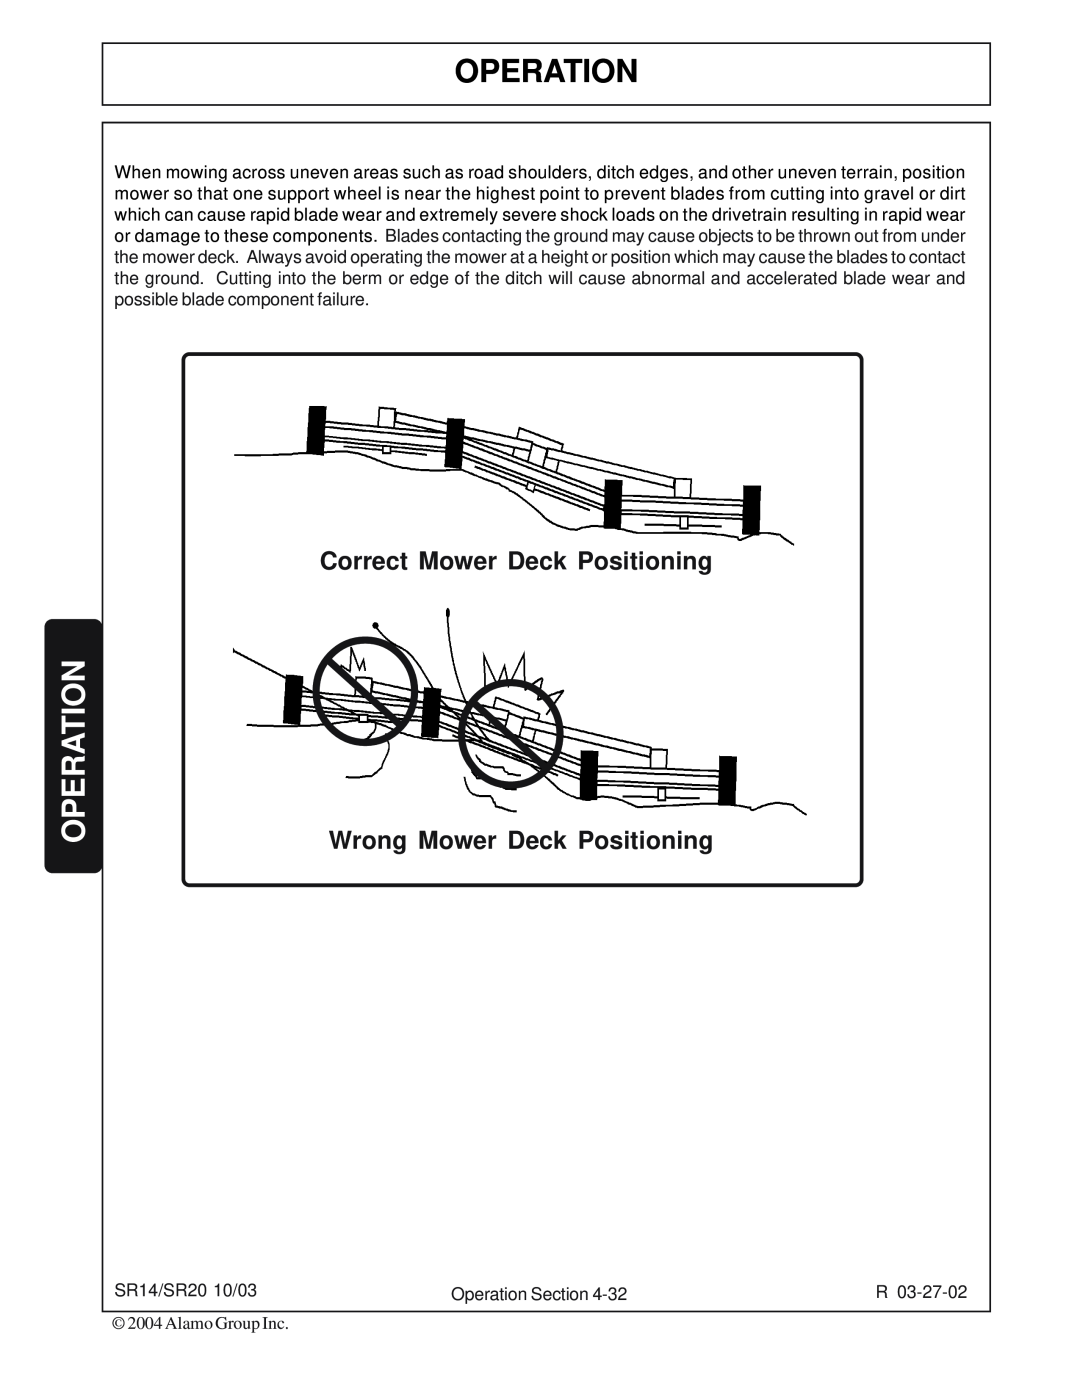 Alamo SR20, SR14 manual Operation, Correct Mower Deck Positioning Wrong Mower Deck Positioning 